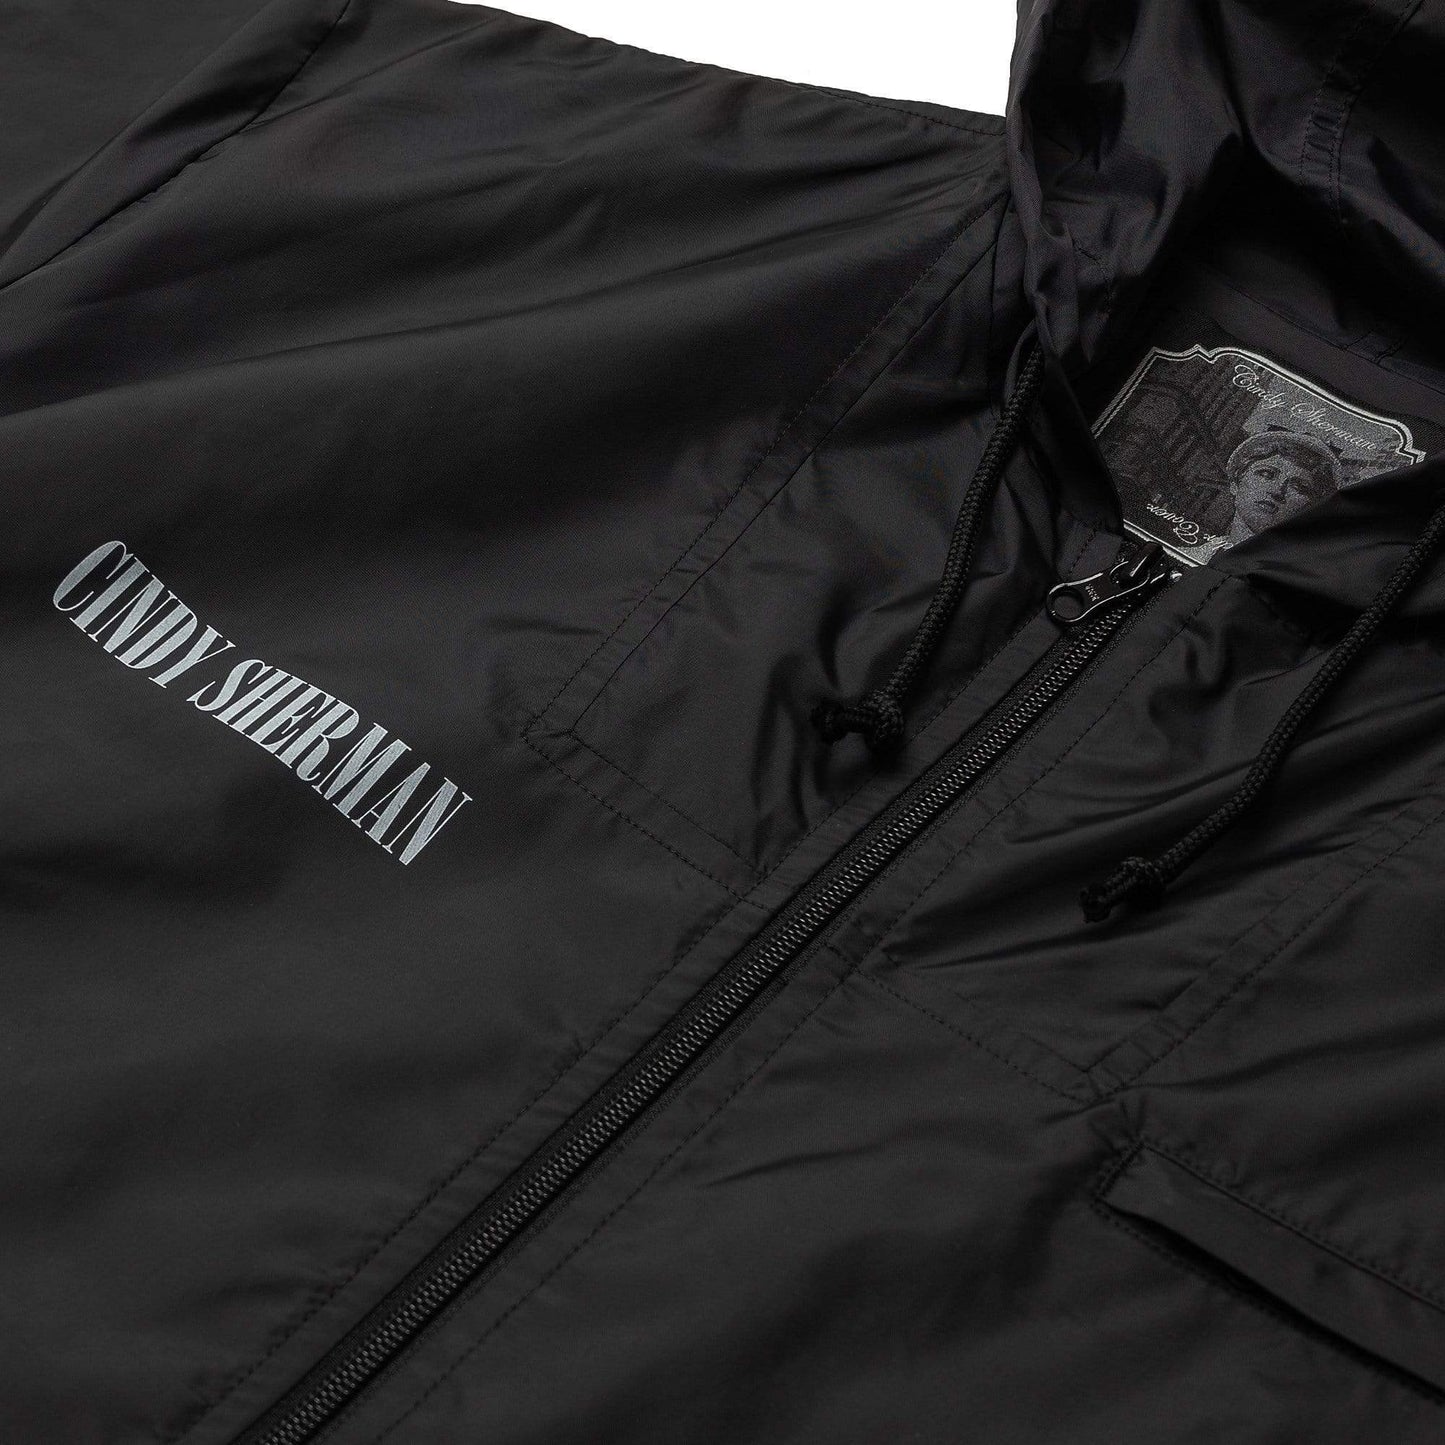 undercover blouson jacket "cindy sherman" (black) - ucy4208-1 - a.plus - Image - 4